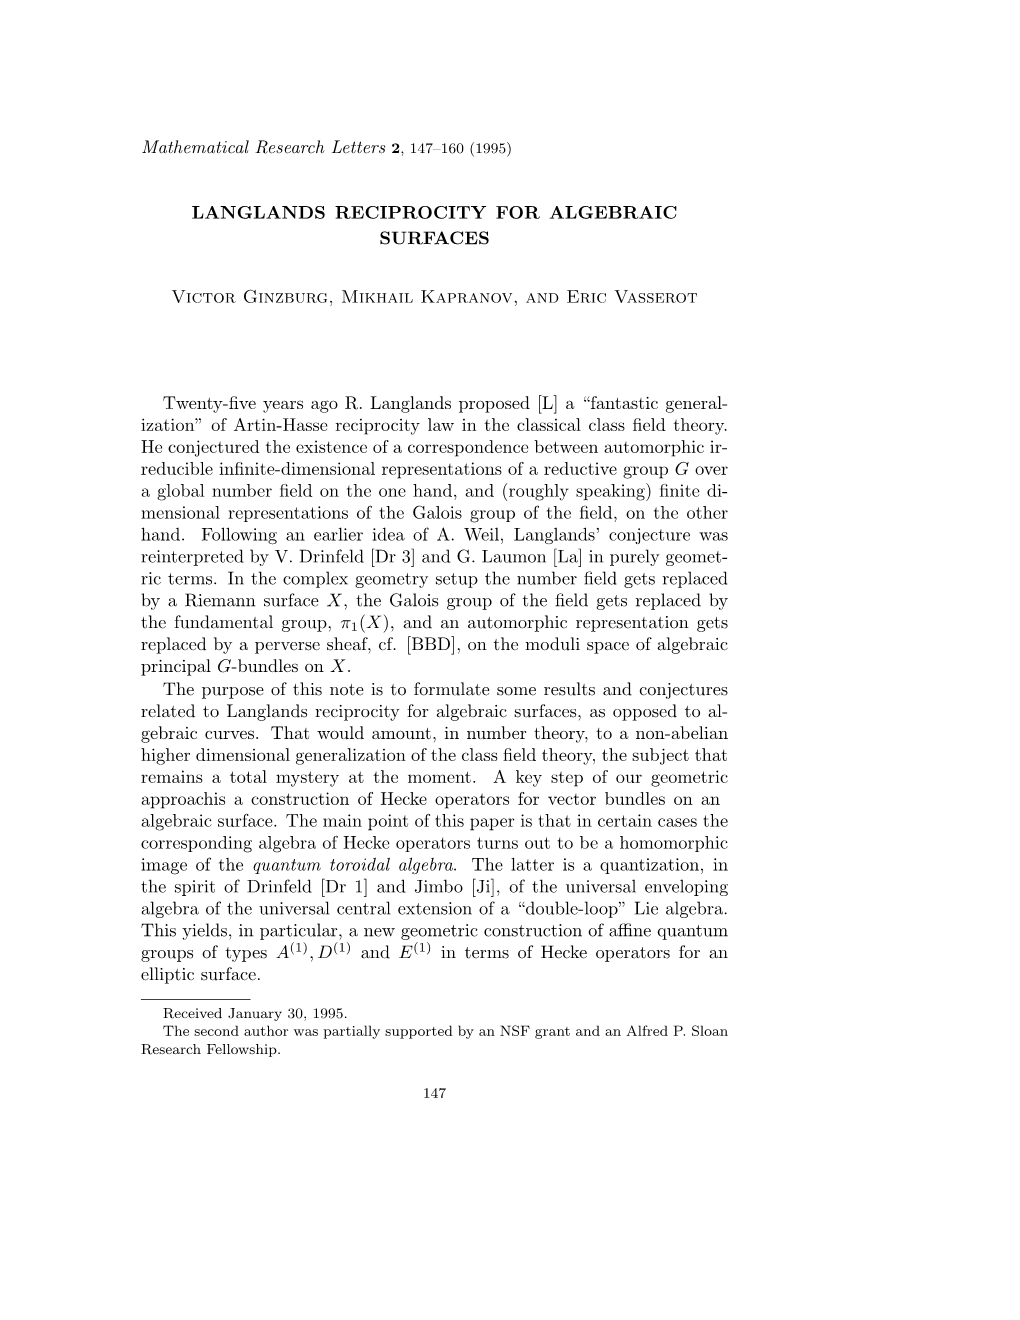 (1995) Langlands Reciprocity for Algebraic Surfaces